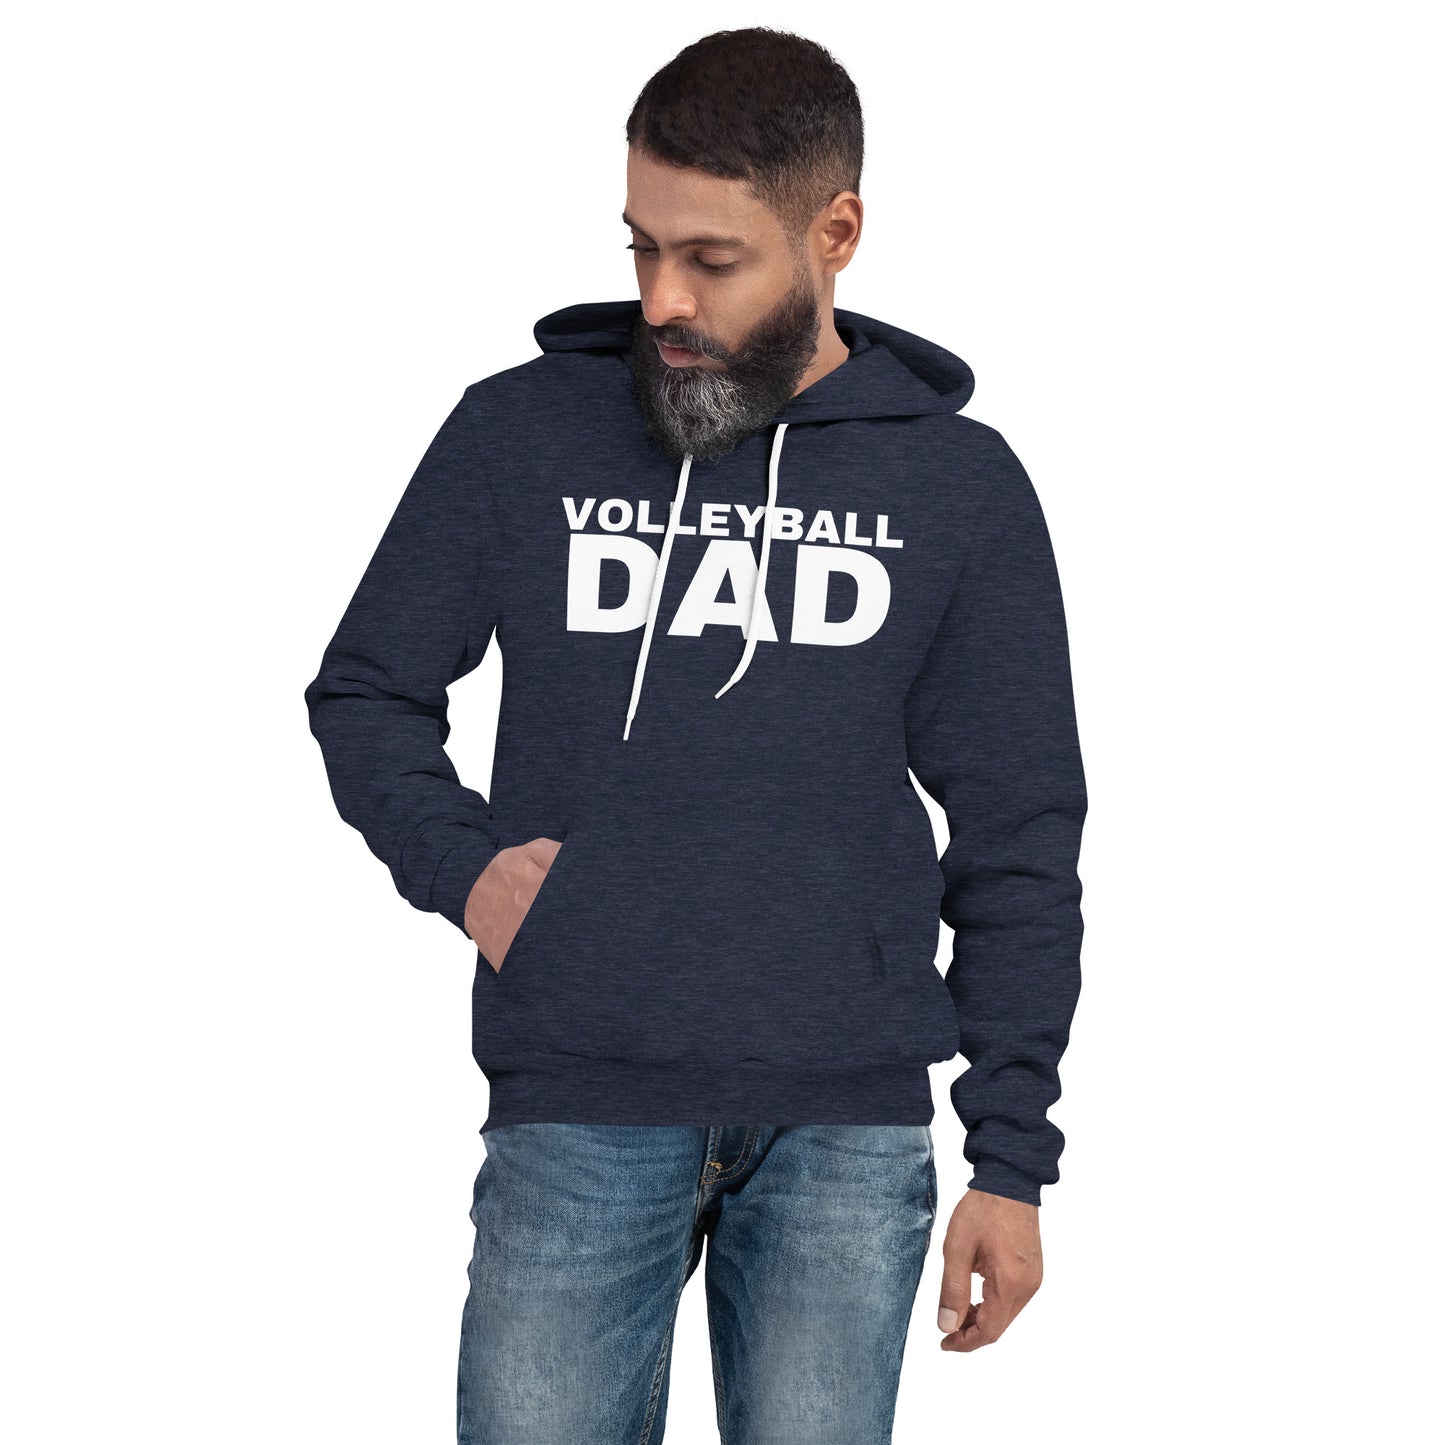 Volleyball Dad | Professional Line Judge - Unisex hoodie